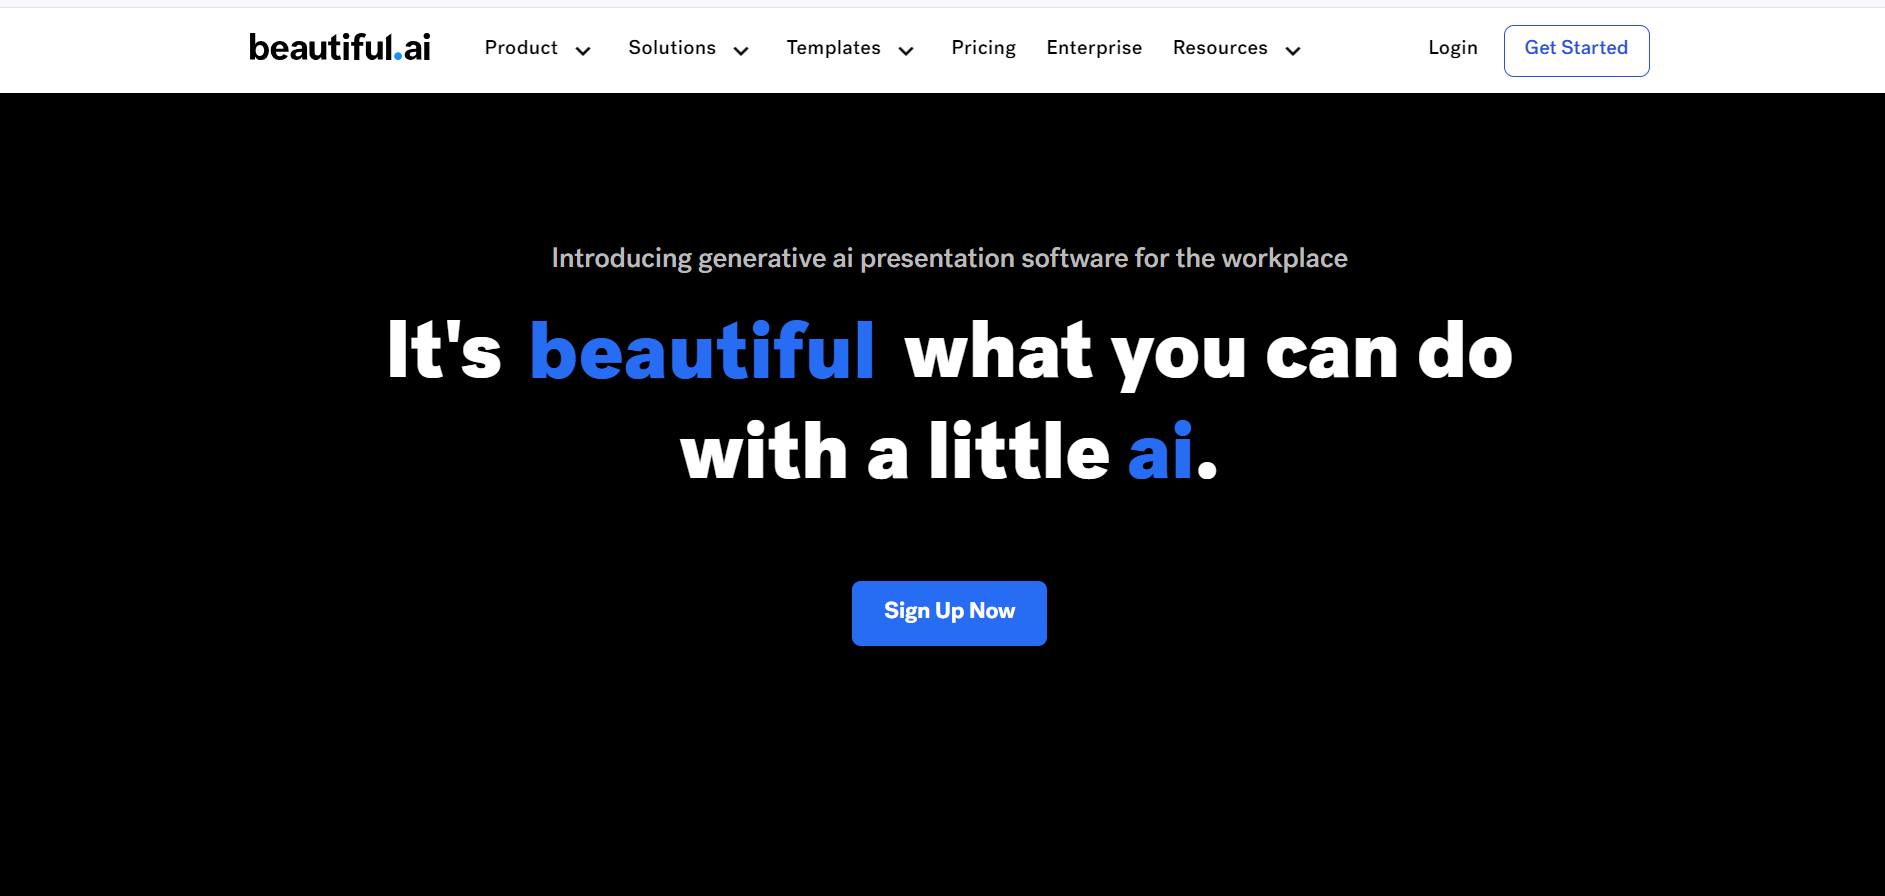 beautifulai-homepage-showcasing-its-design-focused-presentation-creation-capabilities